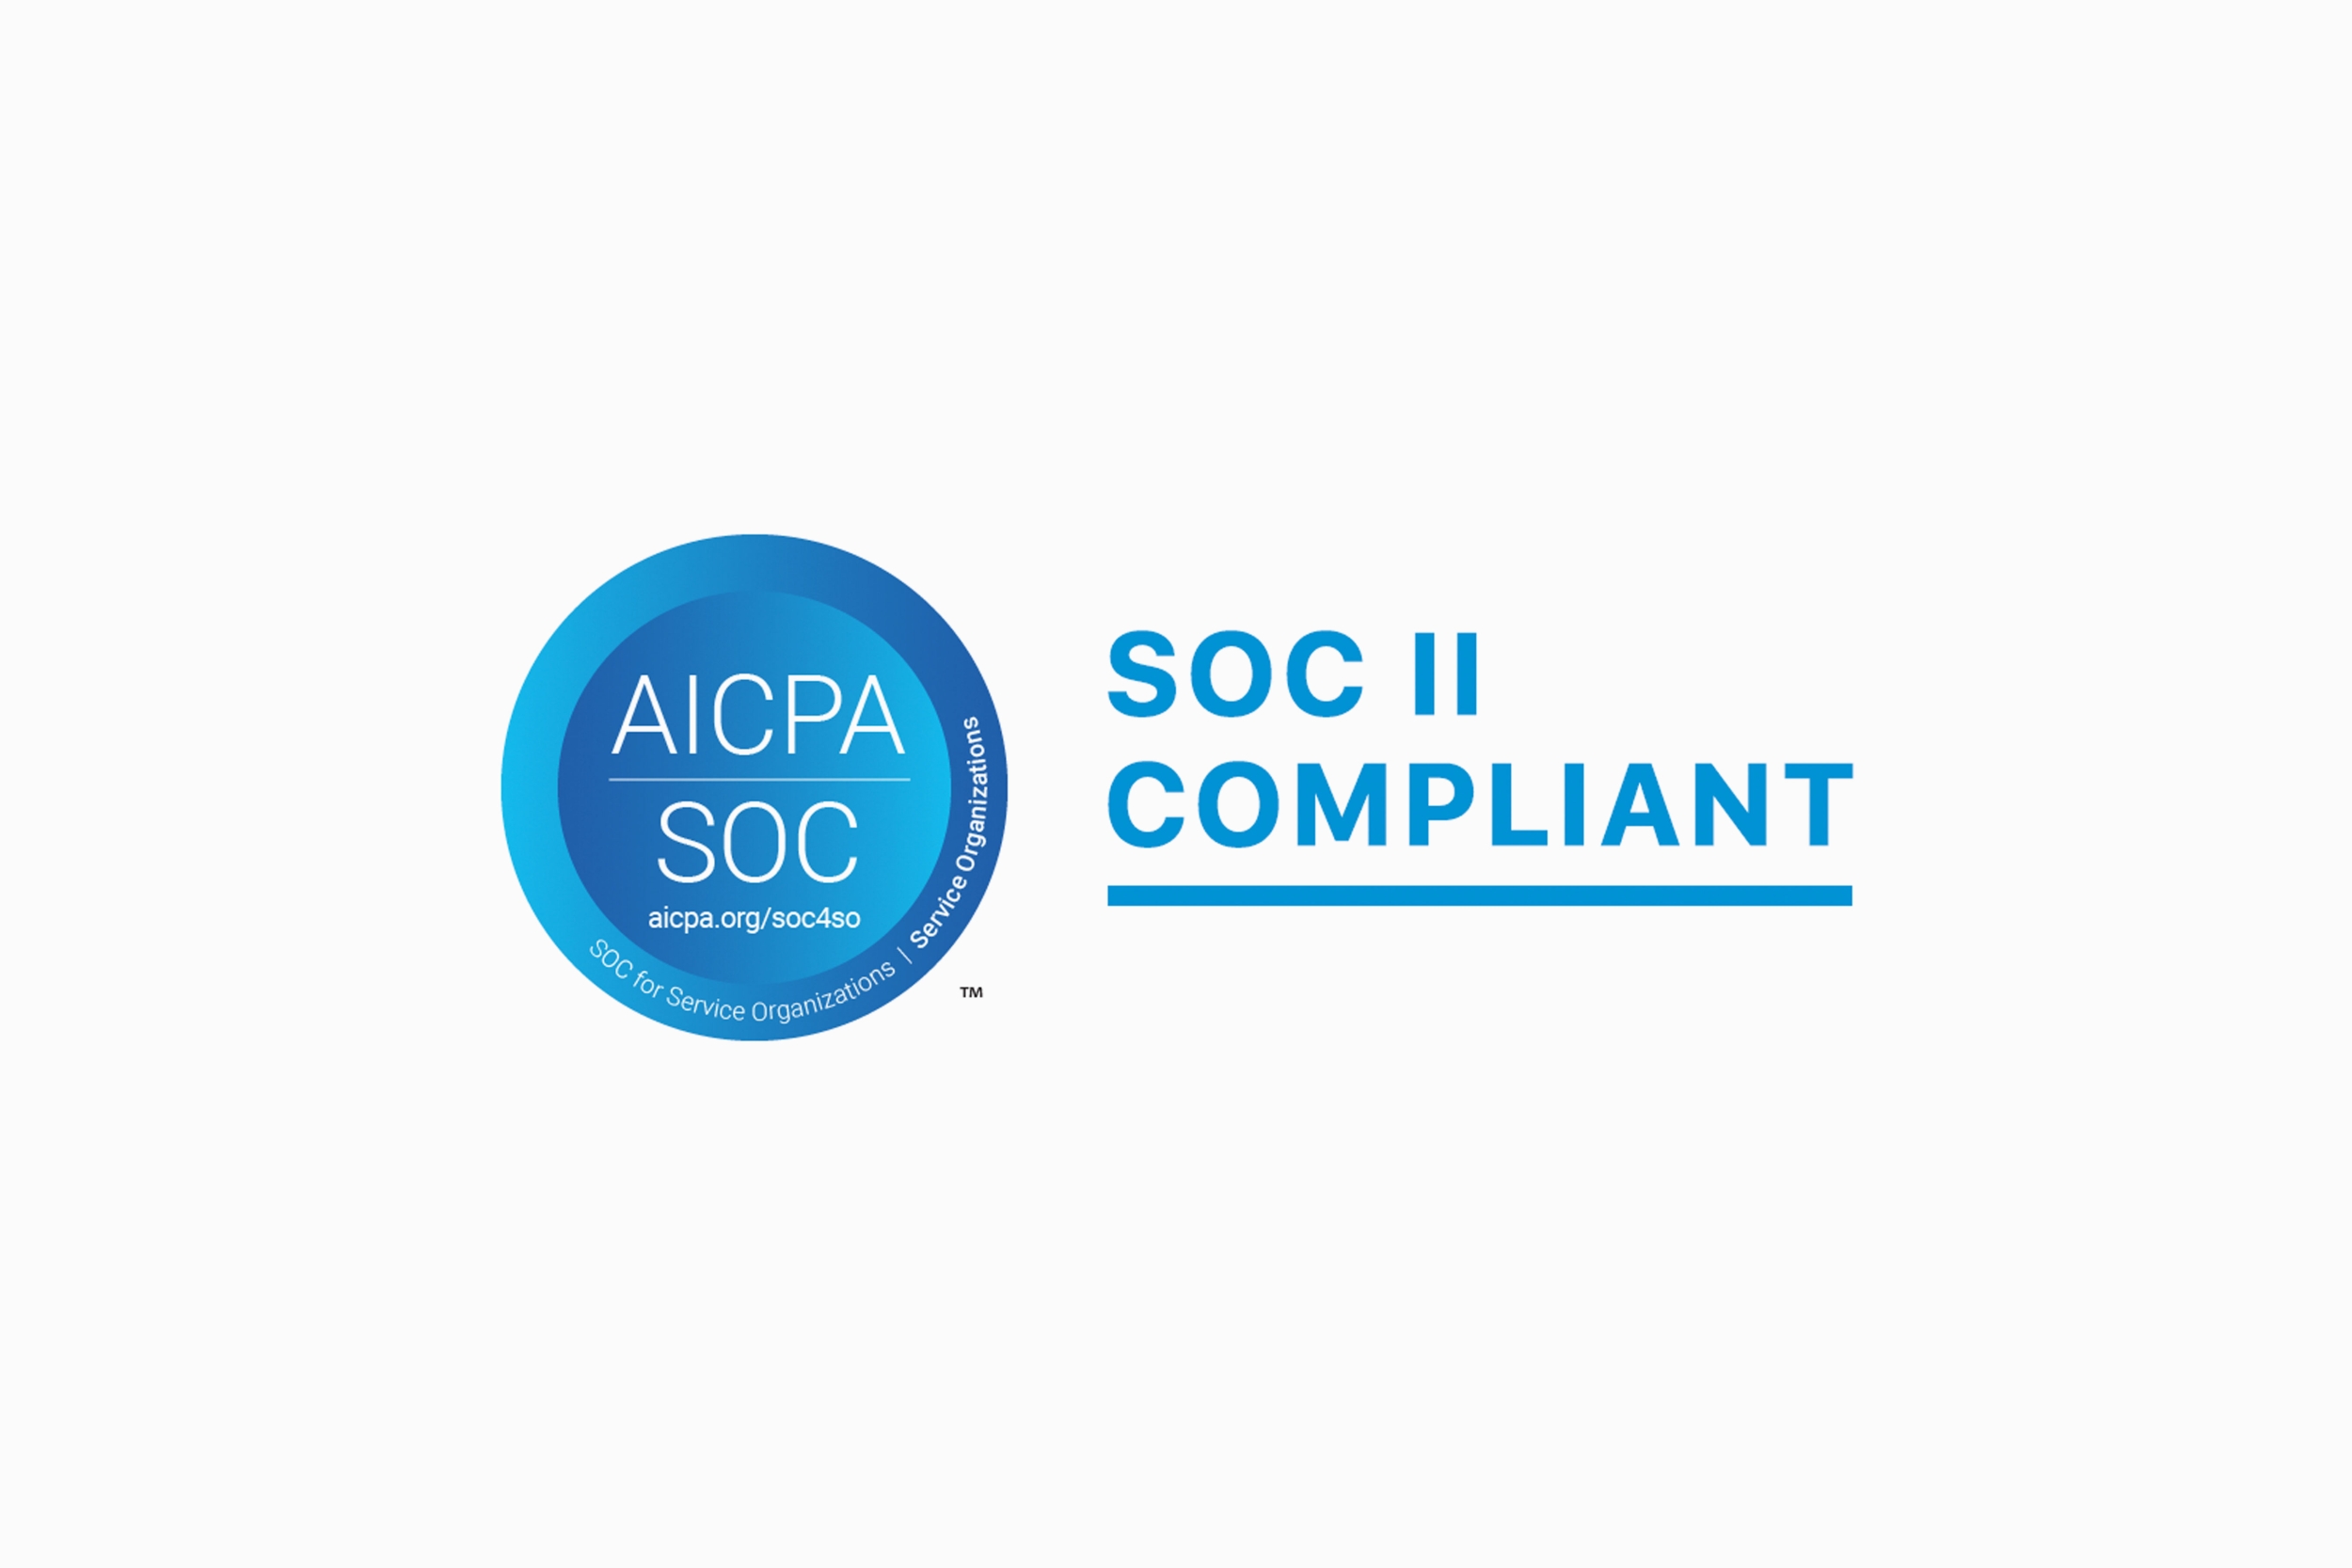 AICPA SOC, SOC II Compliant certificate.